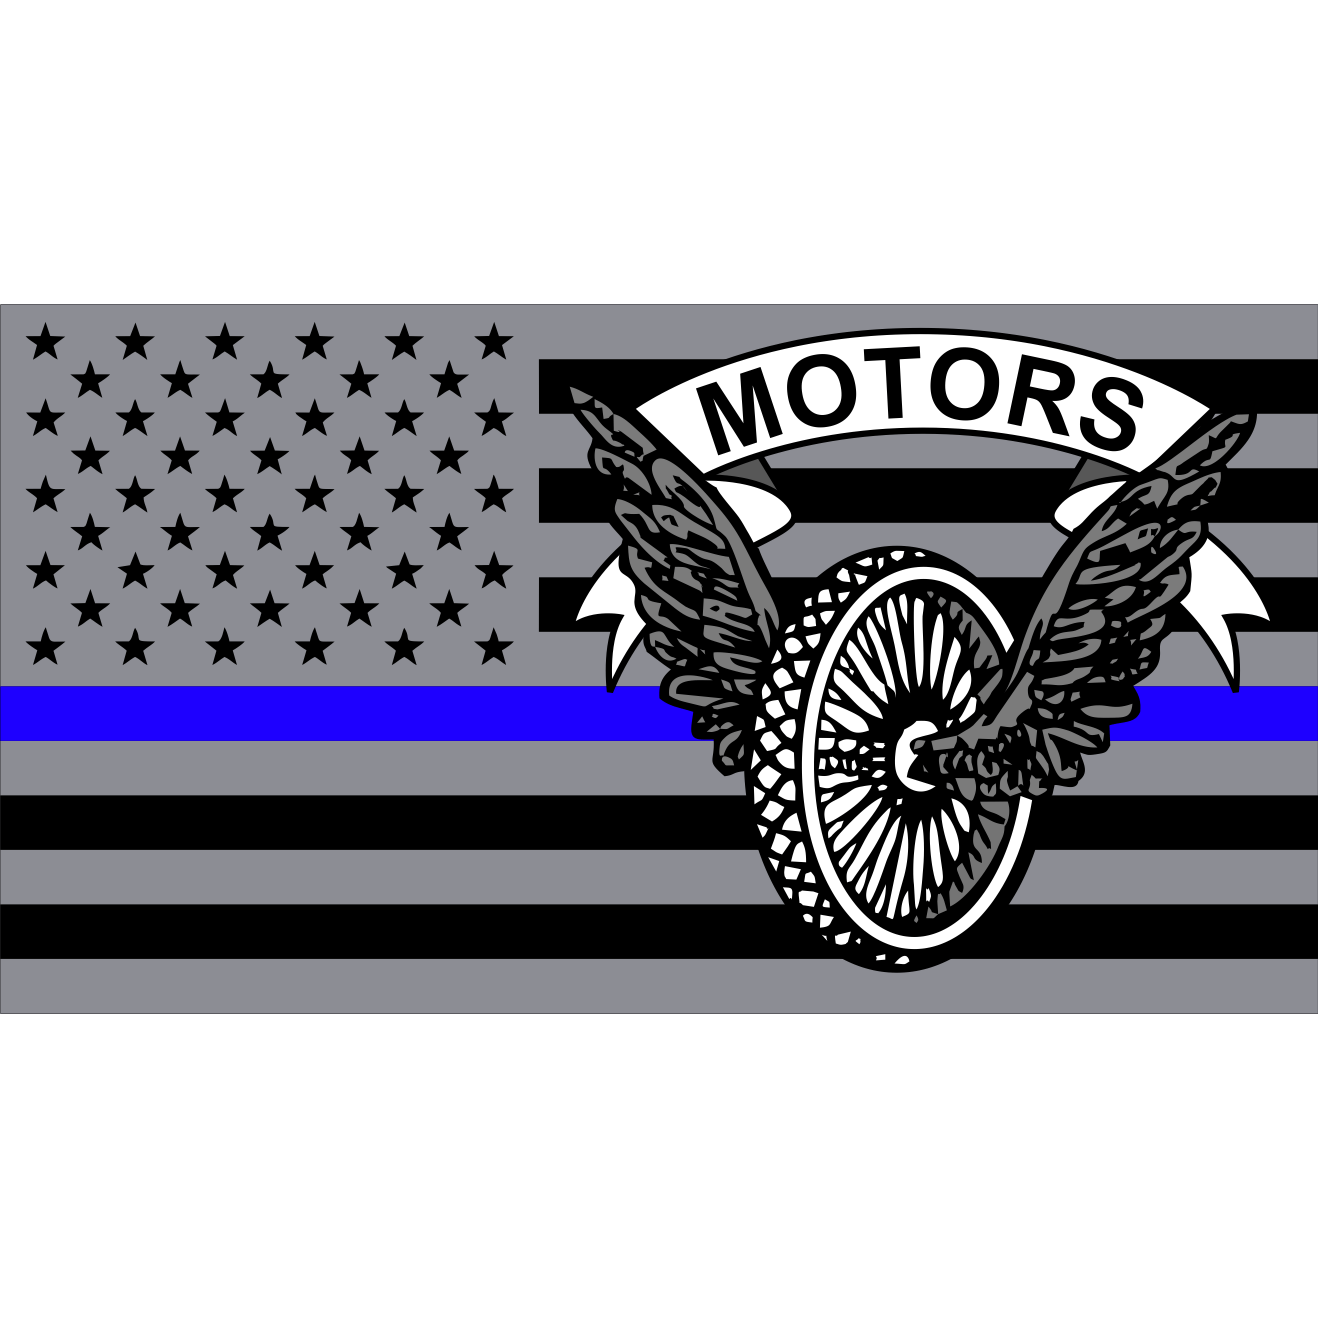 Police Motors US Flag Thin Blue Line - 4.5x2.5 inch Sticker